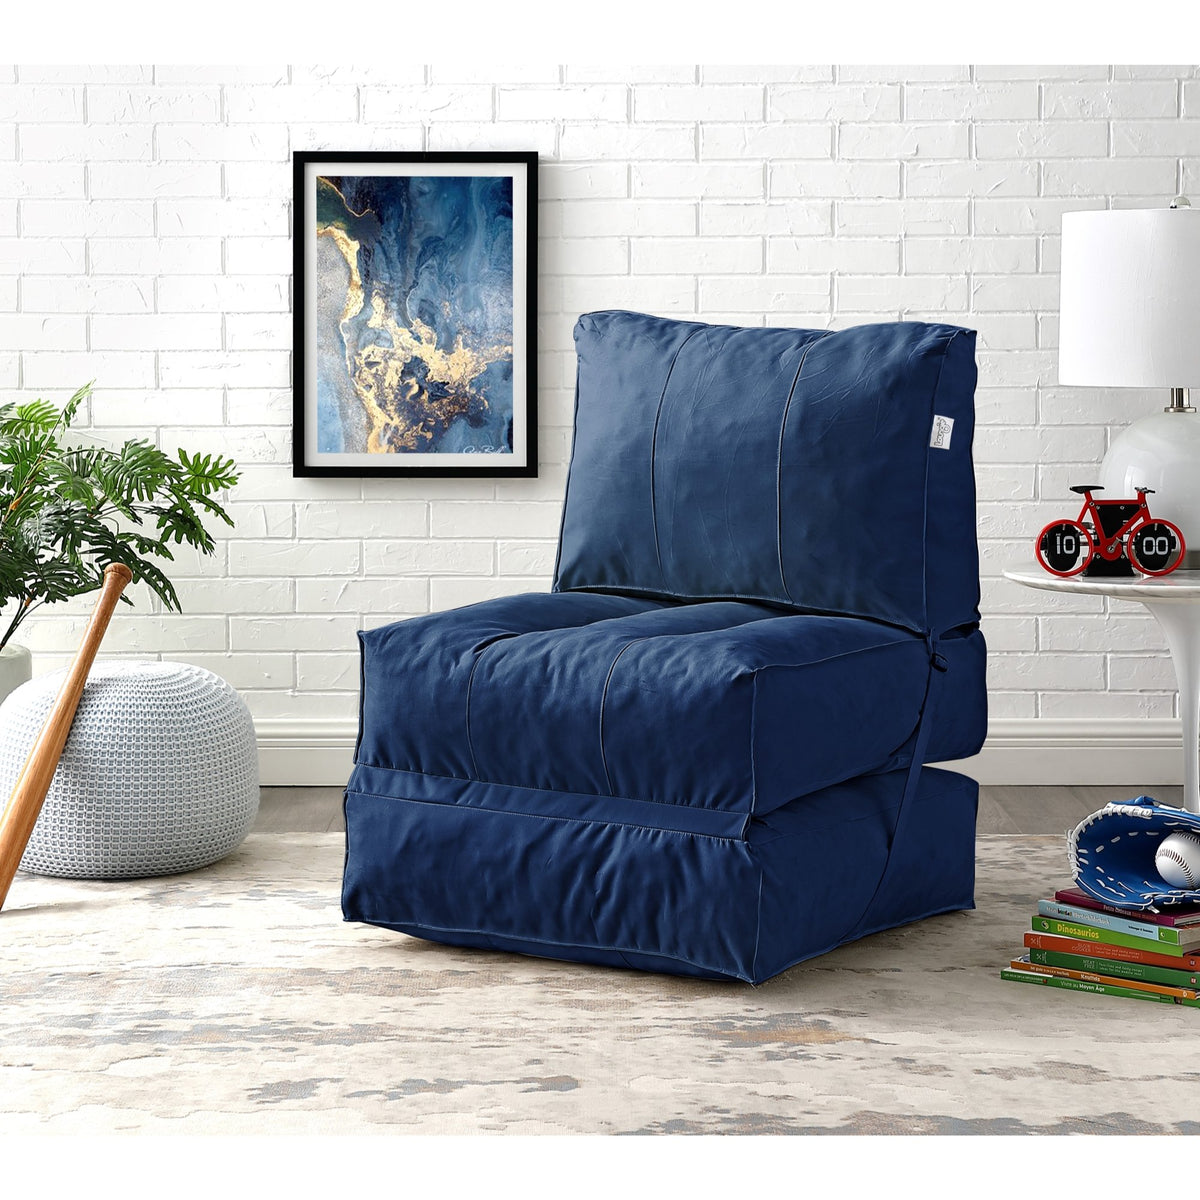 Loungie Microplush Chair Foam Filling - Loungie Living